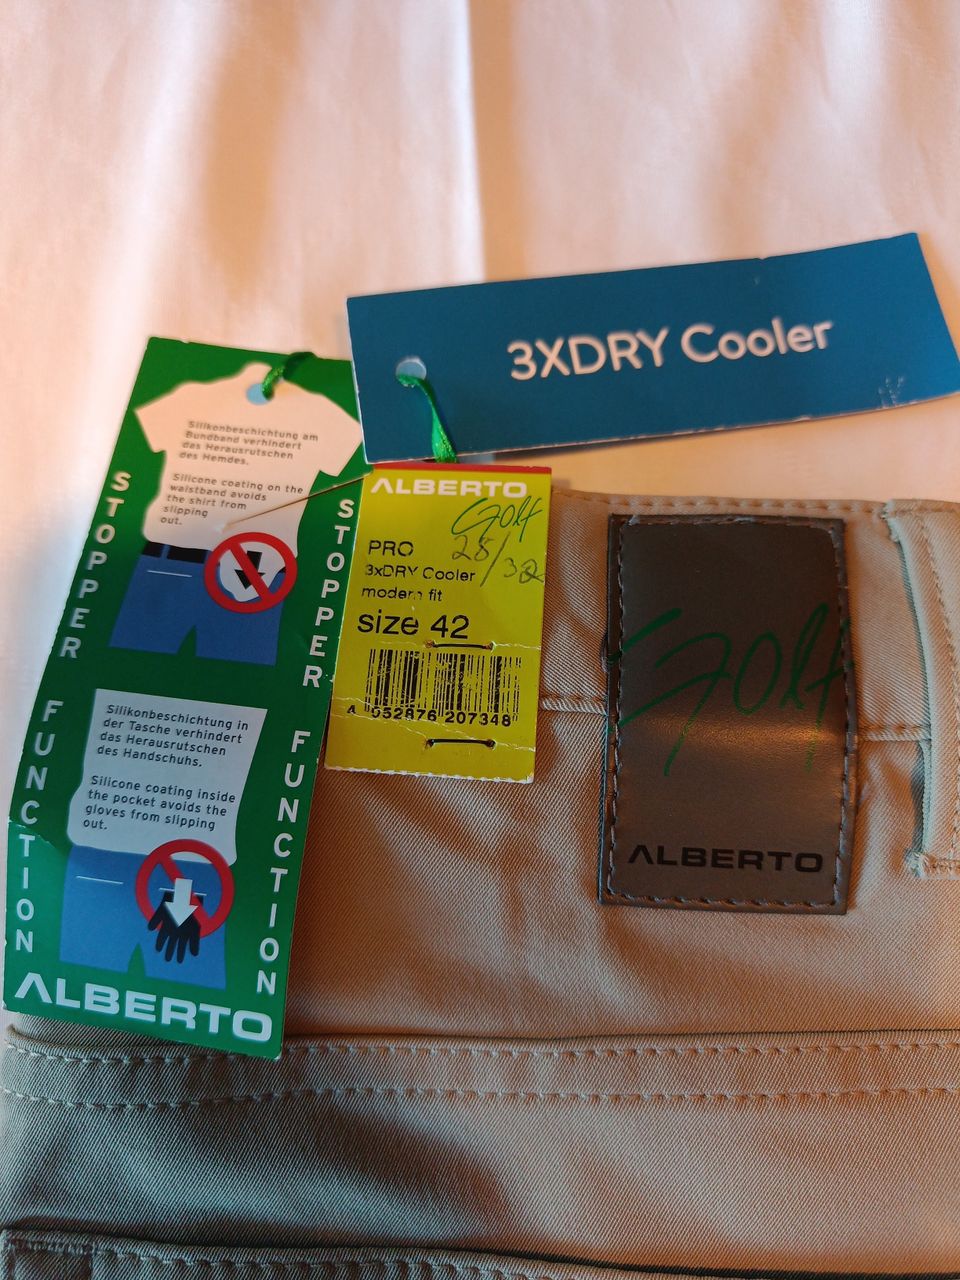 Alberto golfhousut- 3x dry cooler